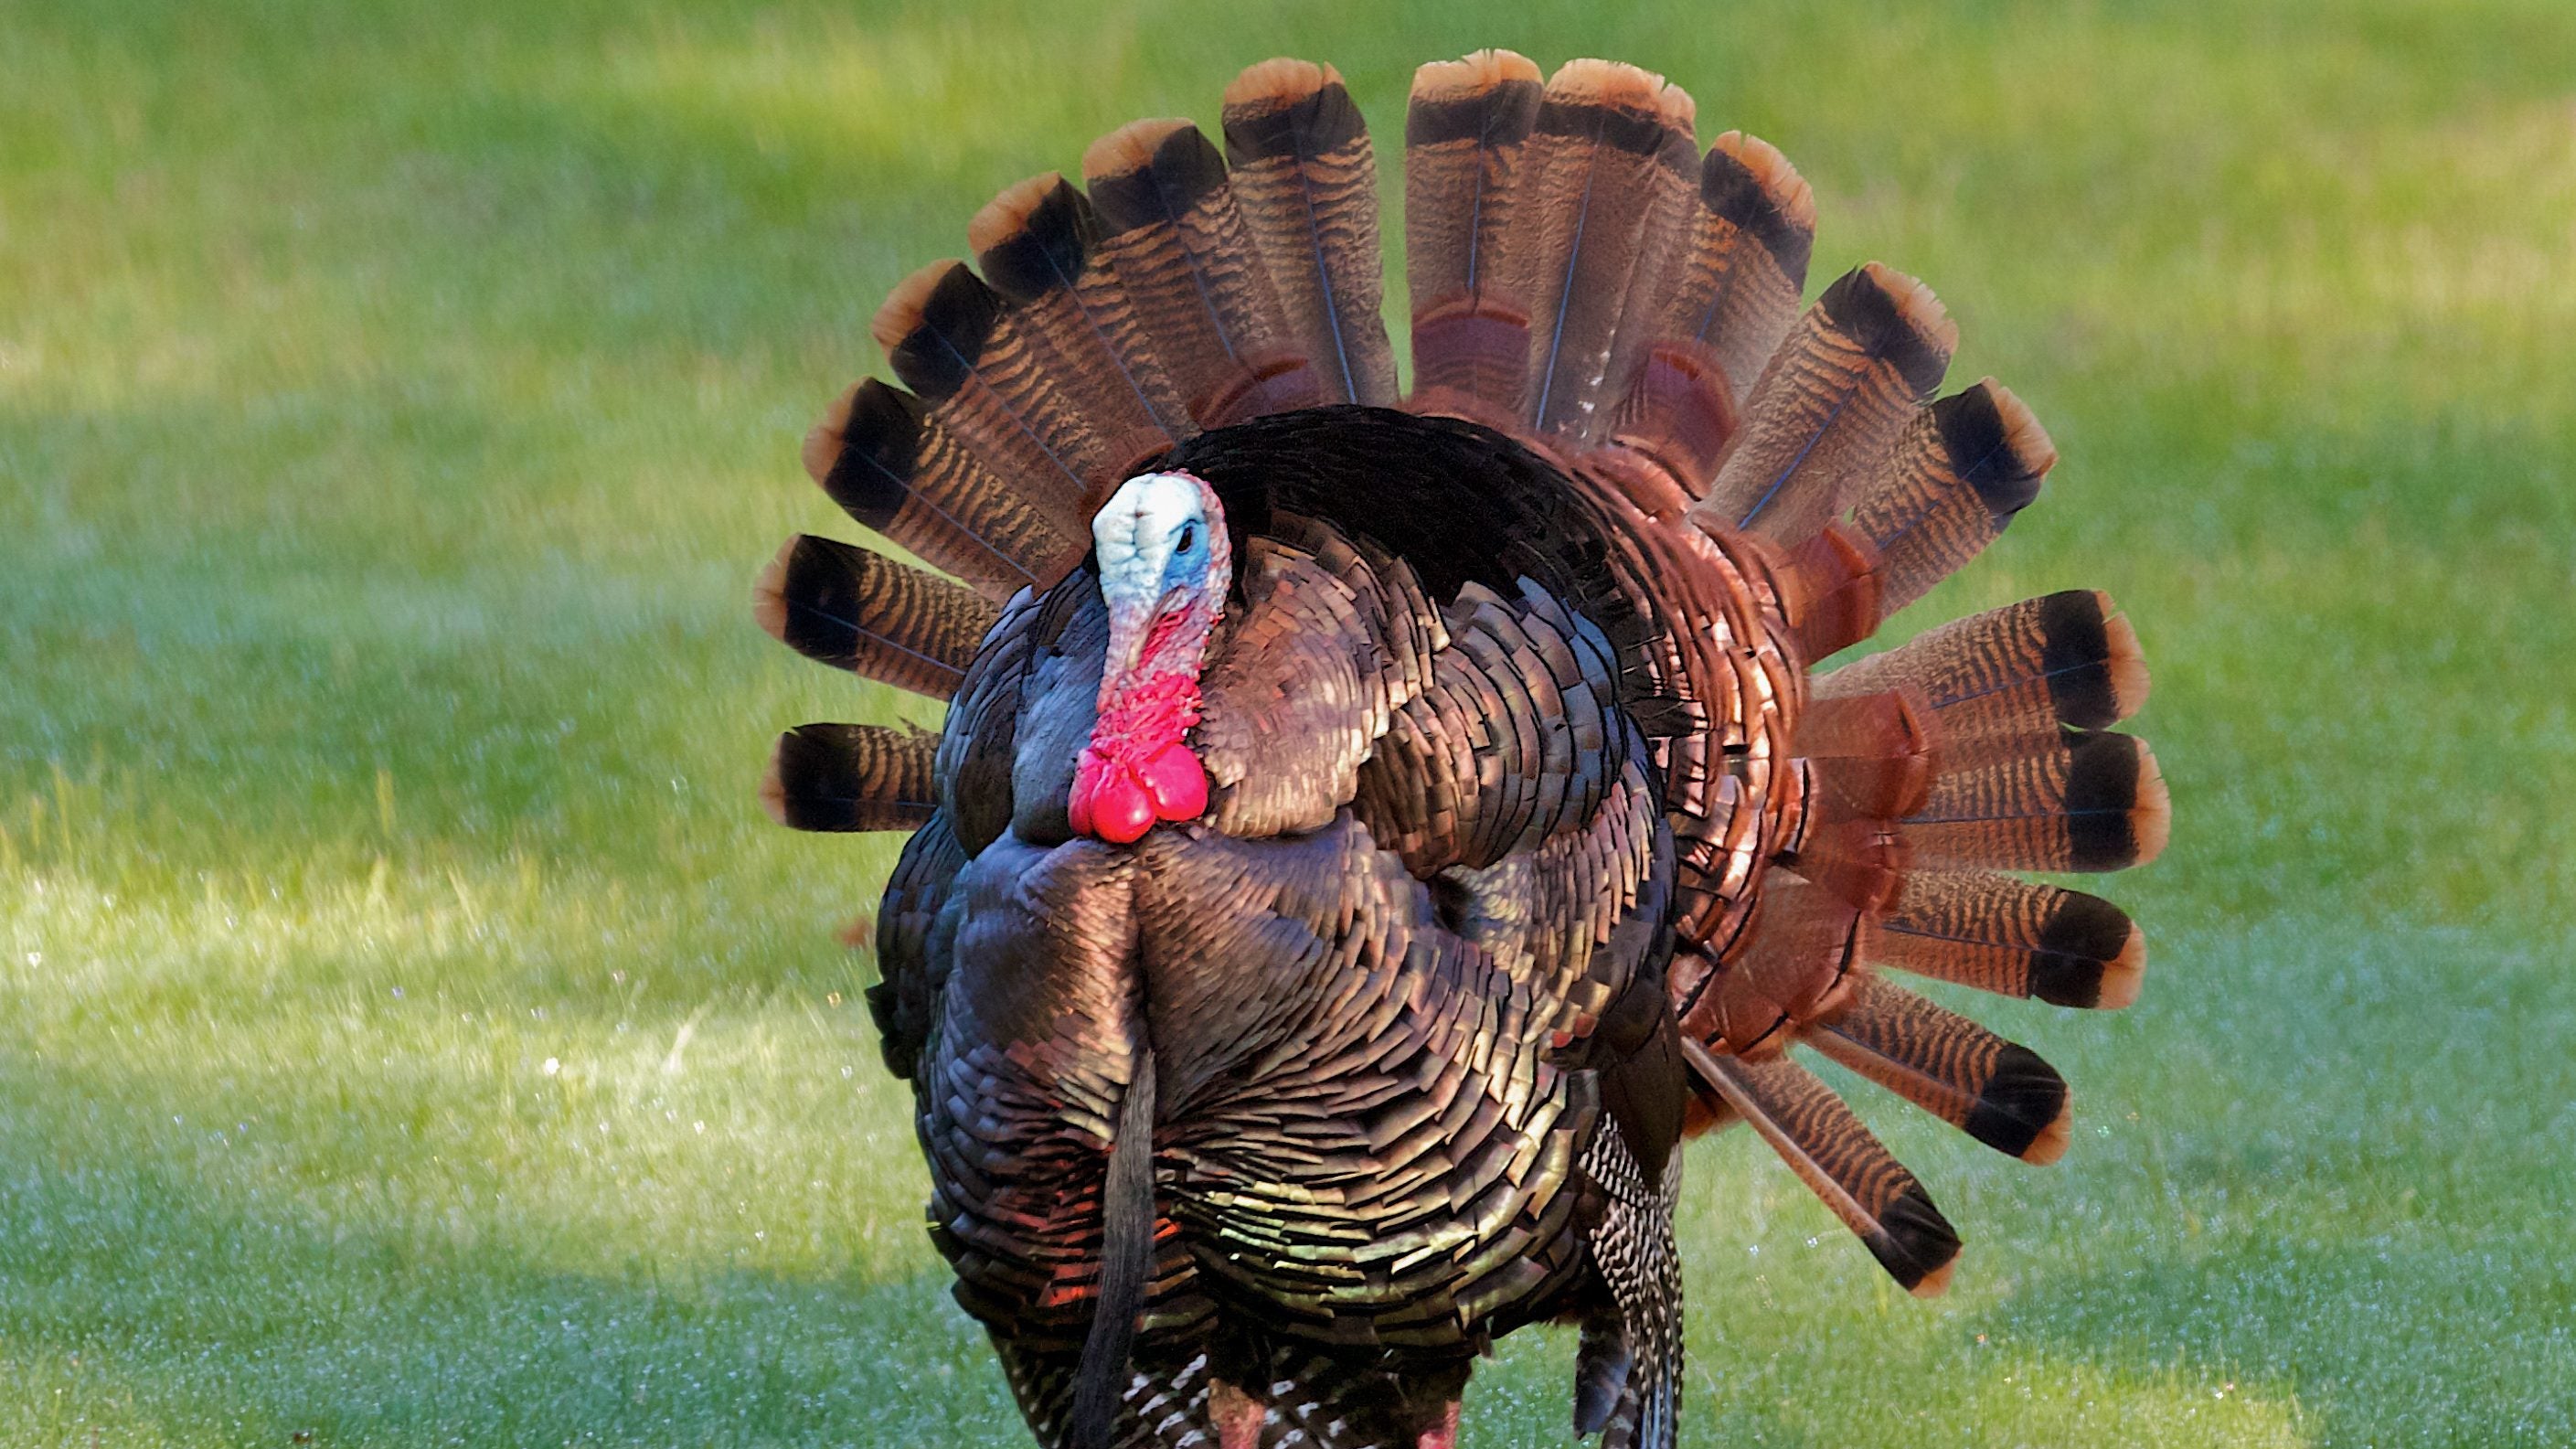 Make turkey day memorable.